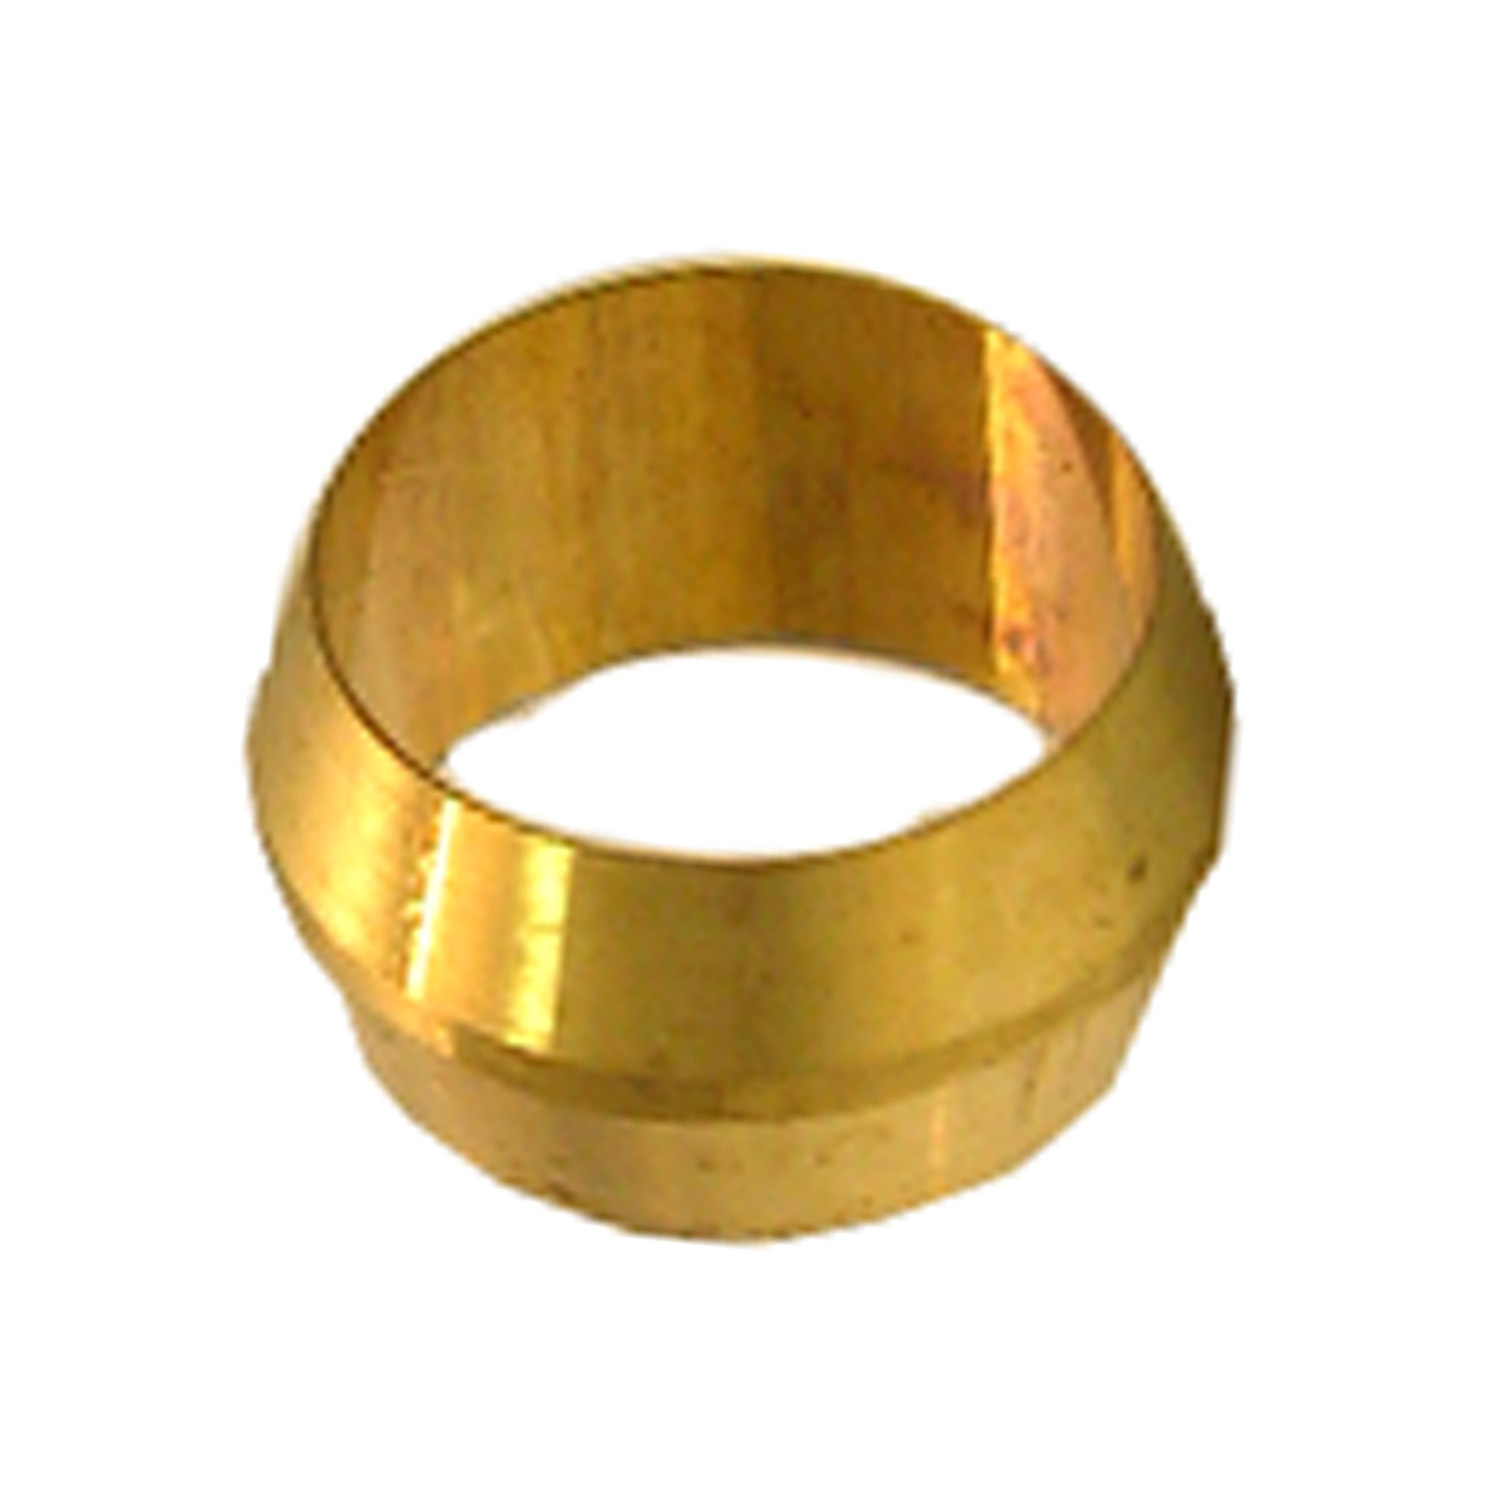 Lasco 17-6021 Pipe Sleeve, 5/16 in Compression, Brass, 2/PK